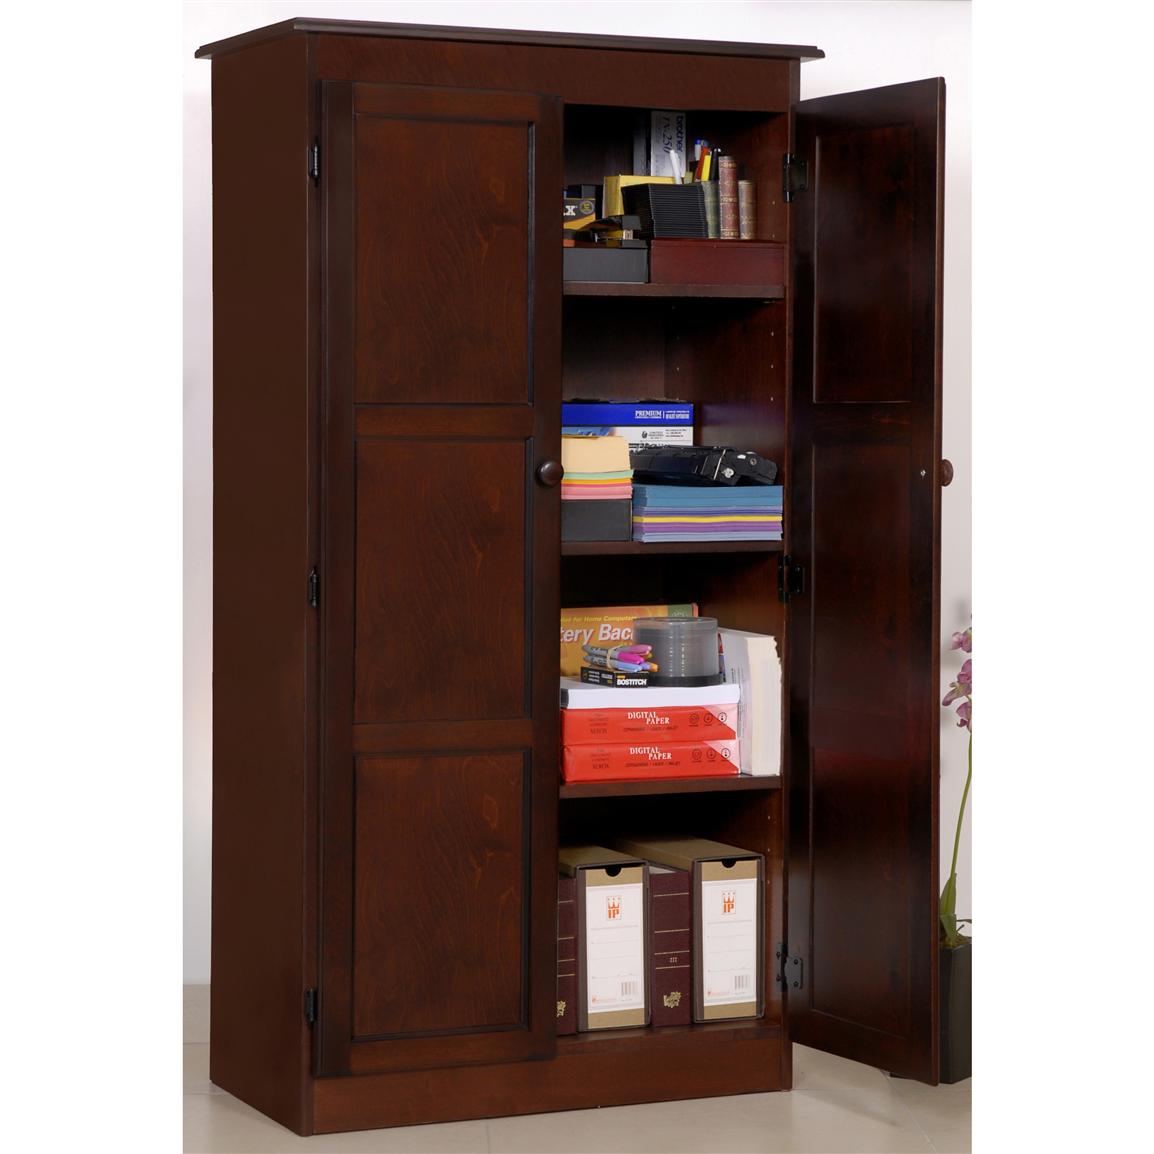 Concepts in Wood Multi - purpose Storage Cabinet - 206547 ...